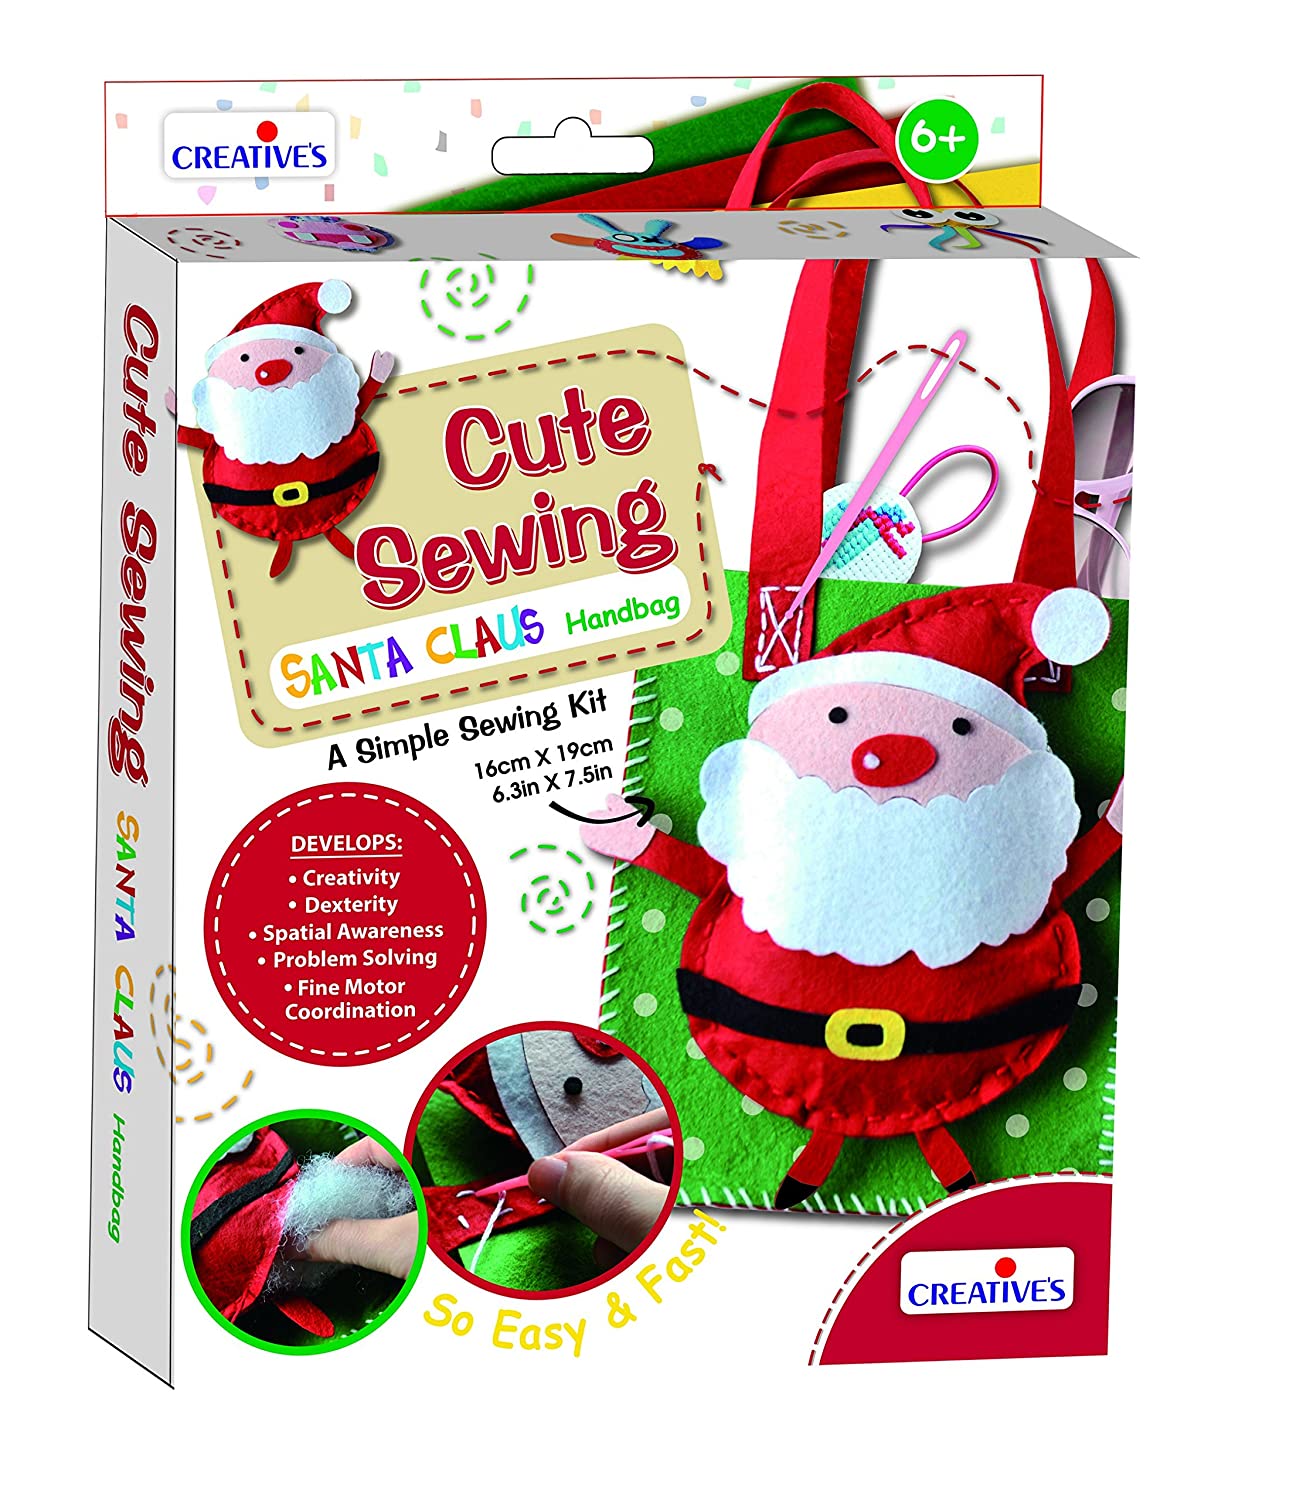 Cute Sewing Santa Claus Handbag: A Simple Sewing Kit it Yourself 